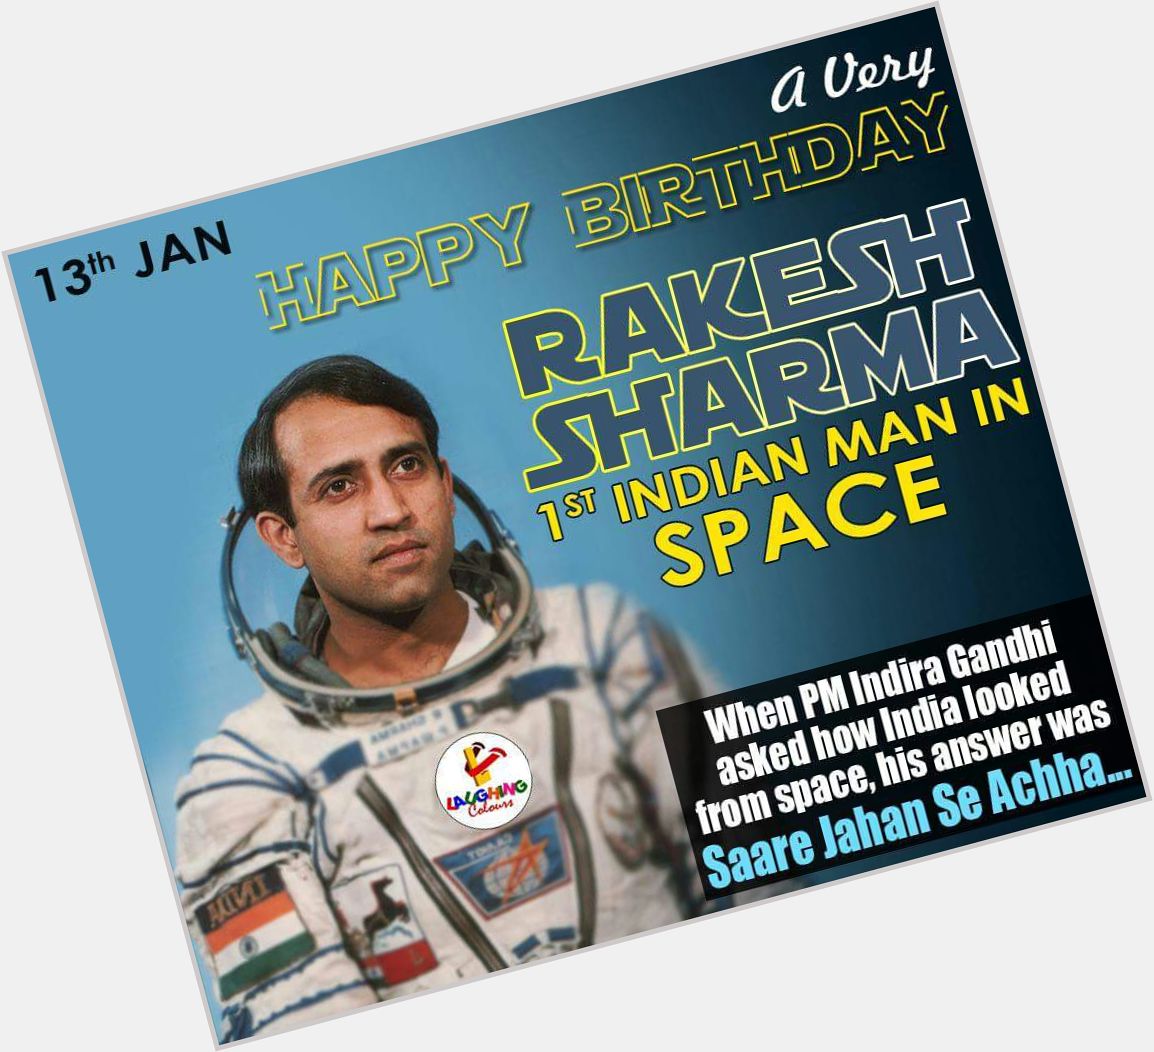 Happy birthday Rakesh Sharma.
You felt us proud.Thank you. 